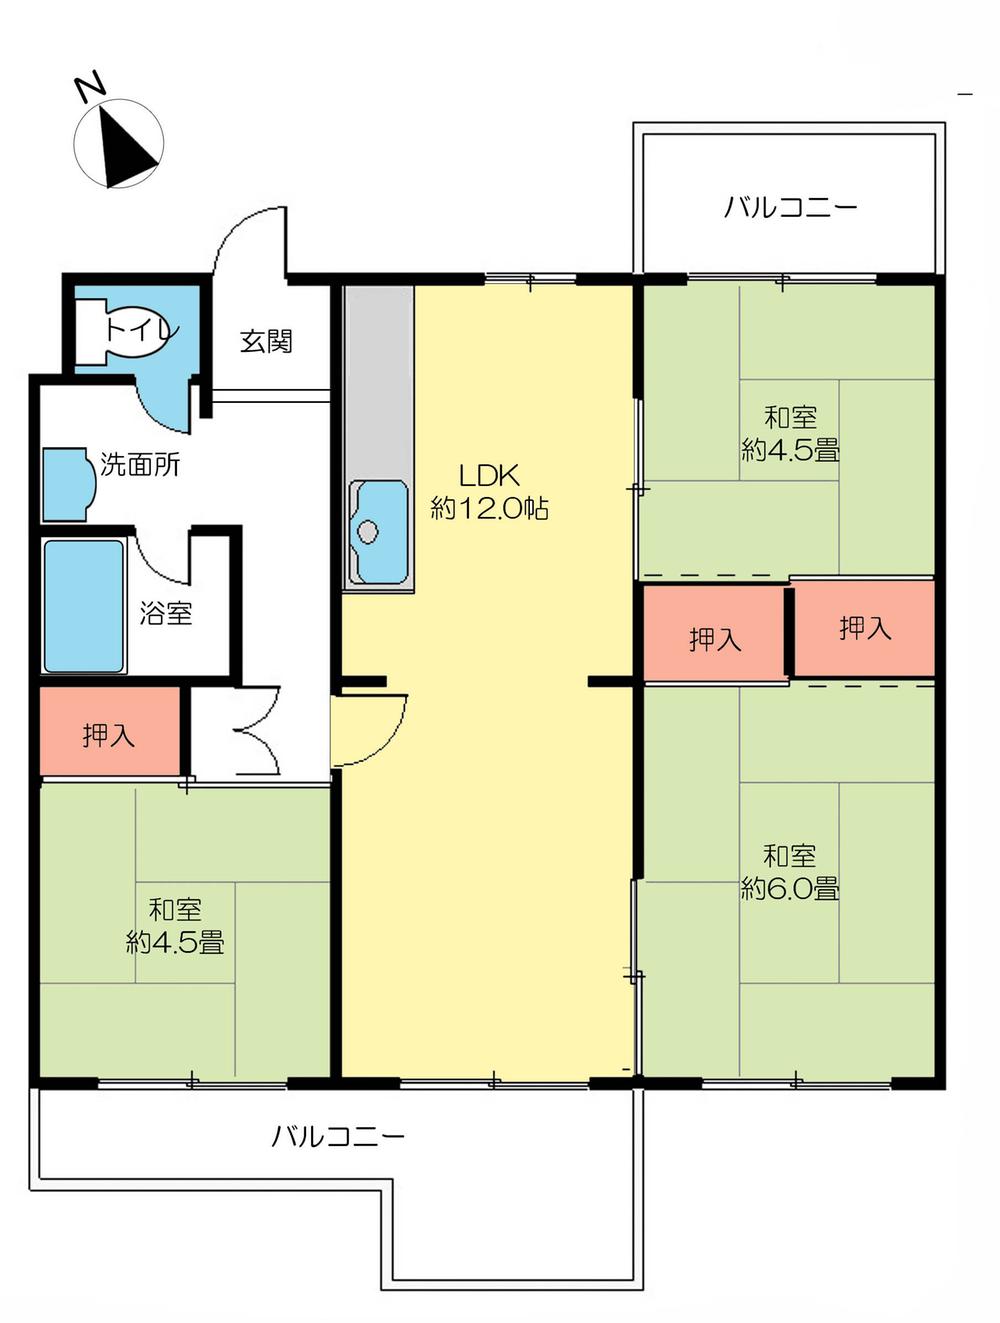 Floor plan. 3LDK, Price 4.6 million yen, Occupied area 60.35 sq m , Balcony area 10.4 sq m floor plan